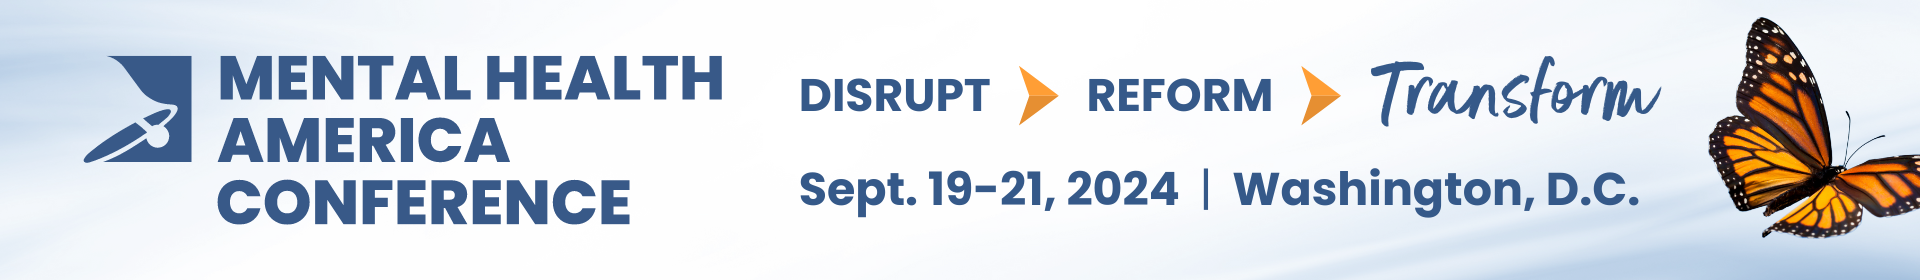 2024 Mental Health America Conference: Disrupt, Reform, Transform Event Banner